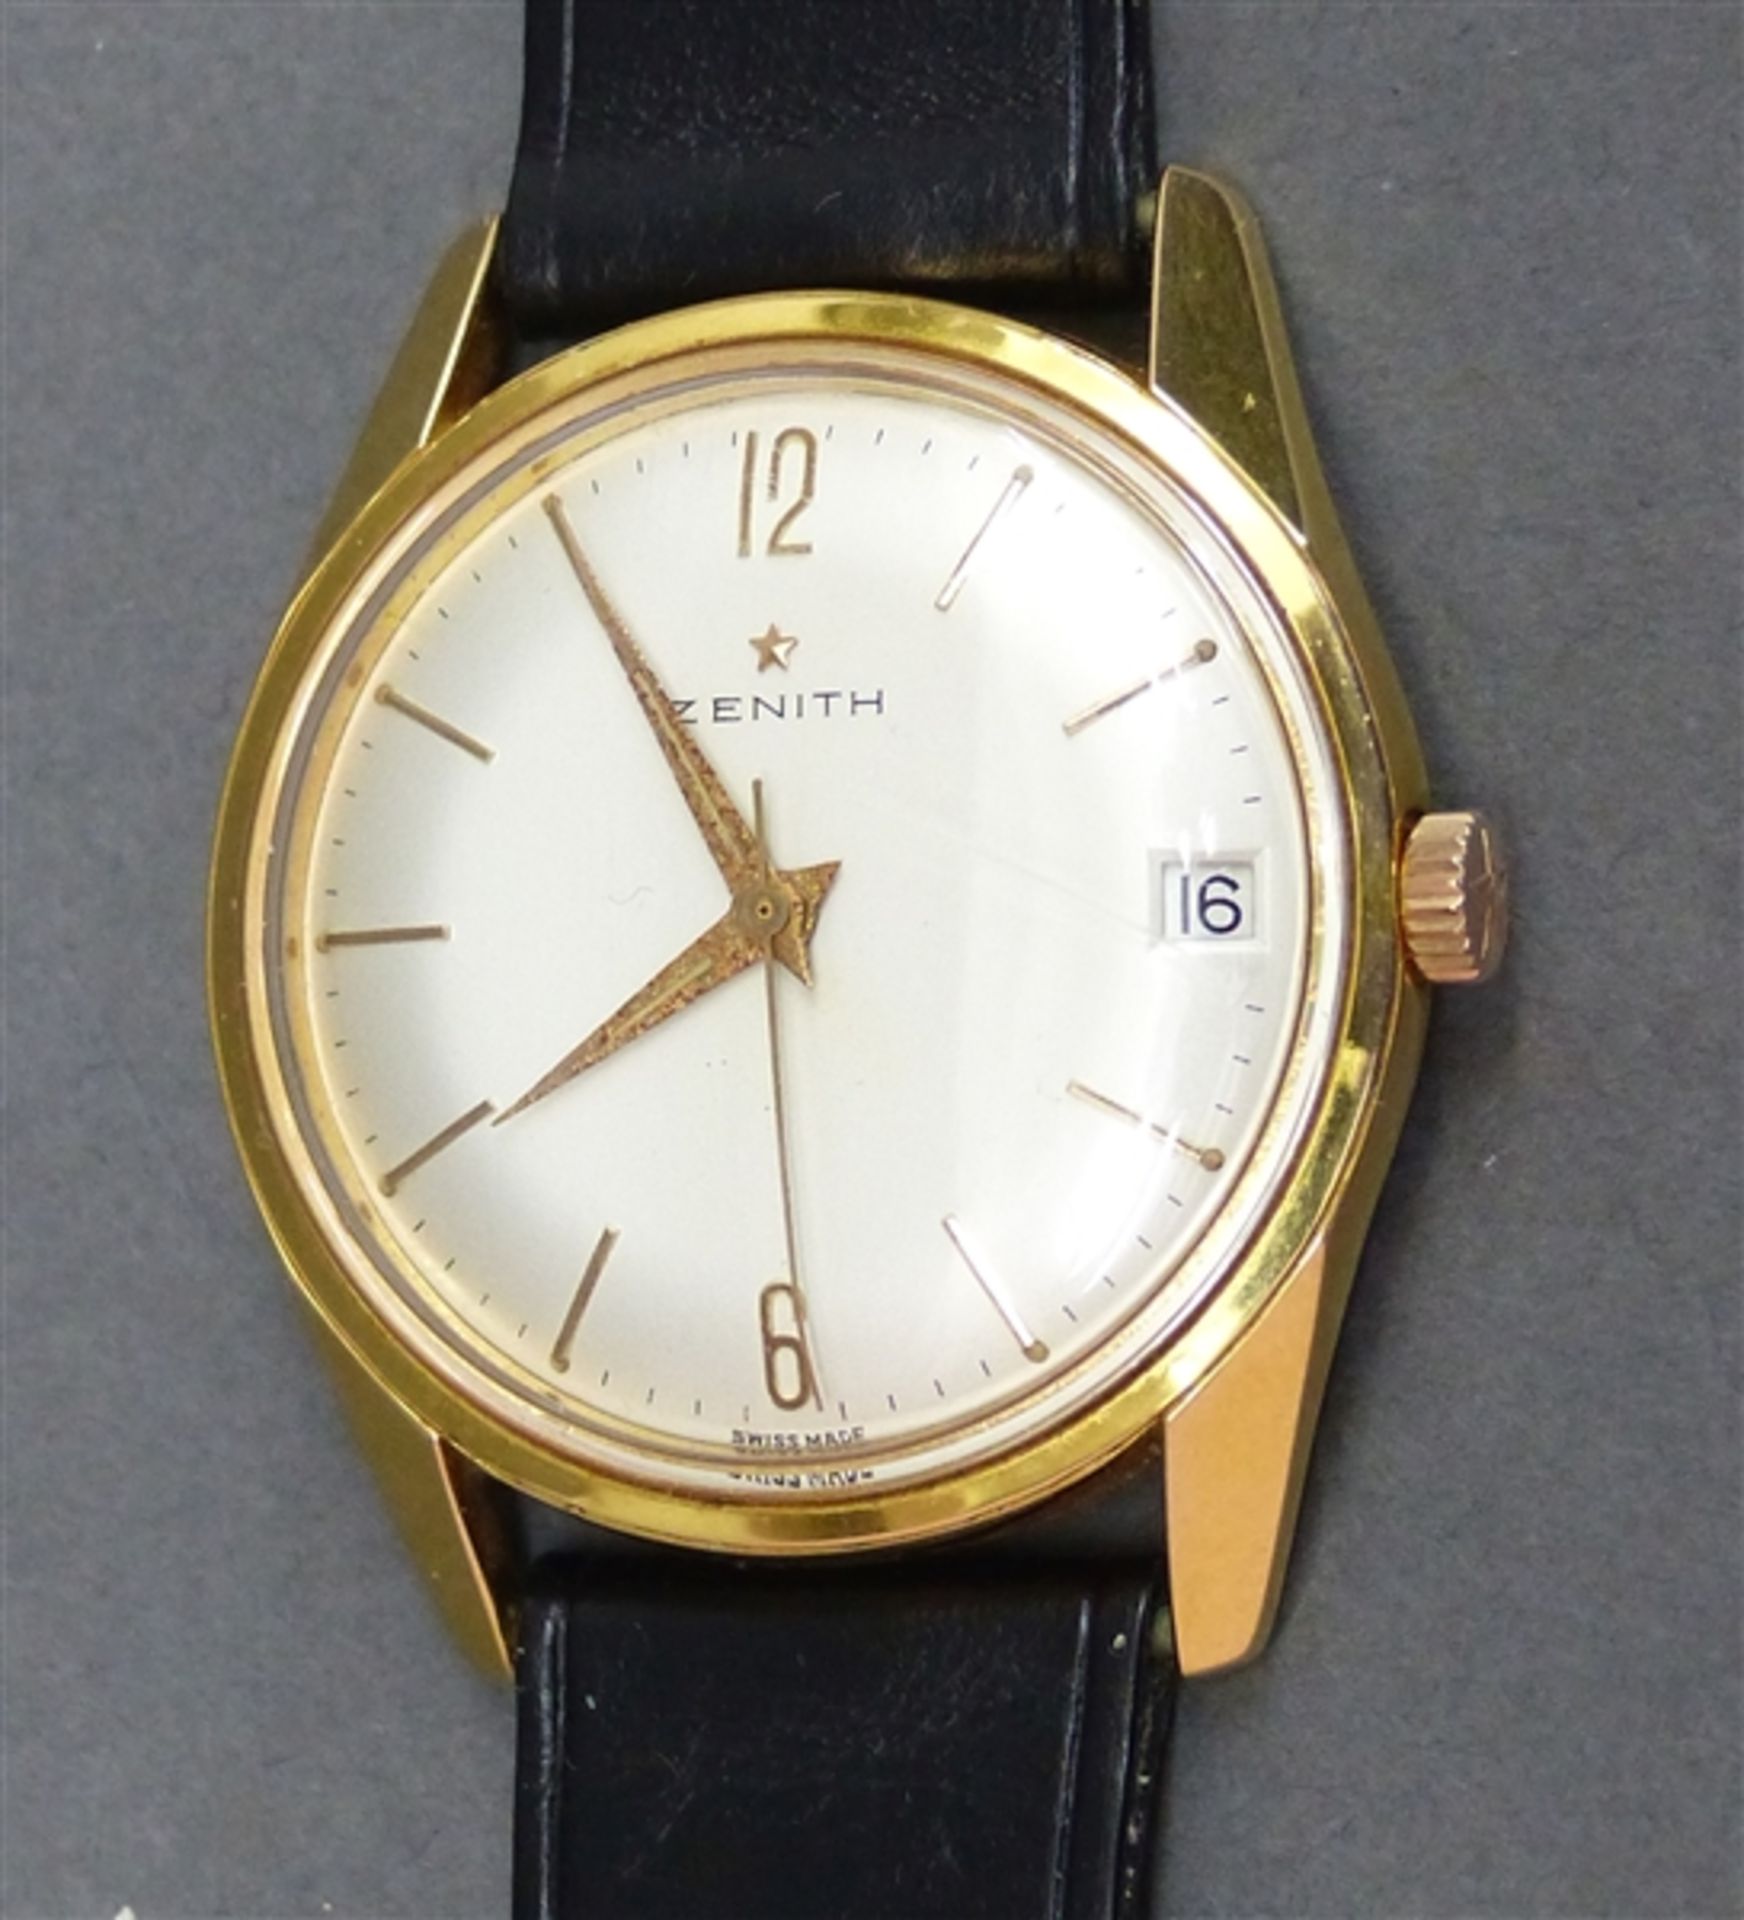 Vintage Armbanduhr Stahl, vergoldet, "Zenith", Handaufzug, weisses Zifferblatt, Datum,